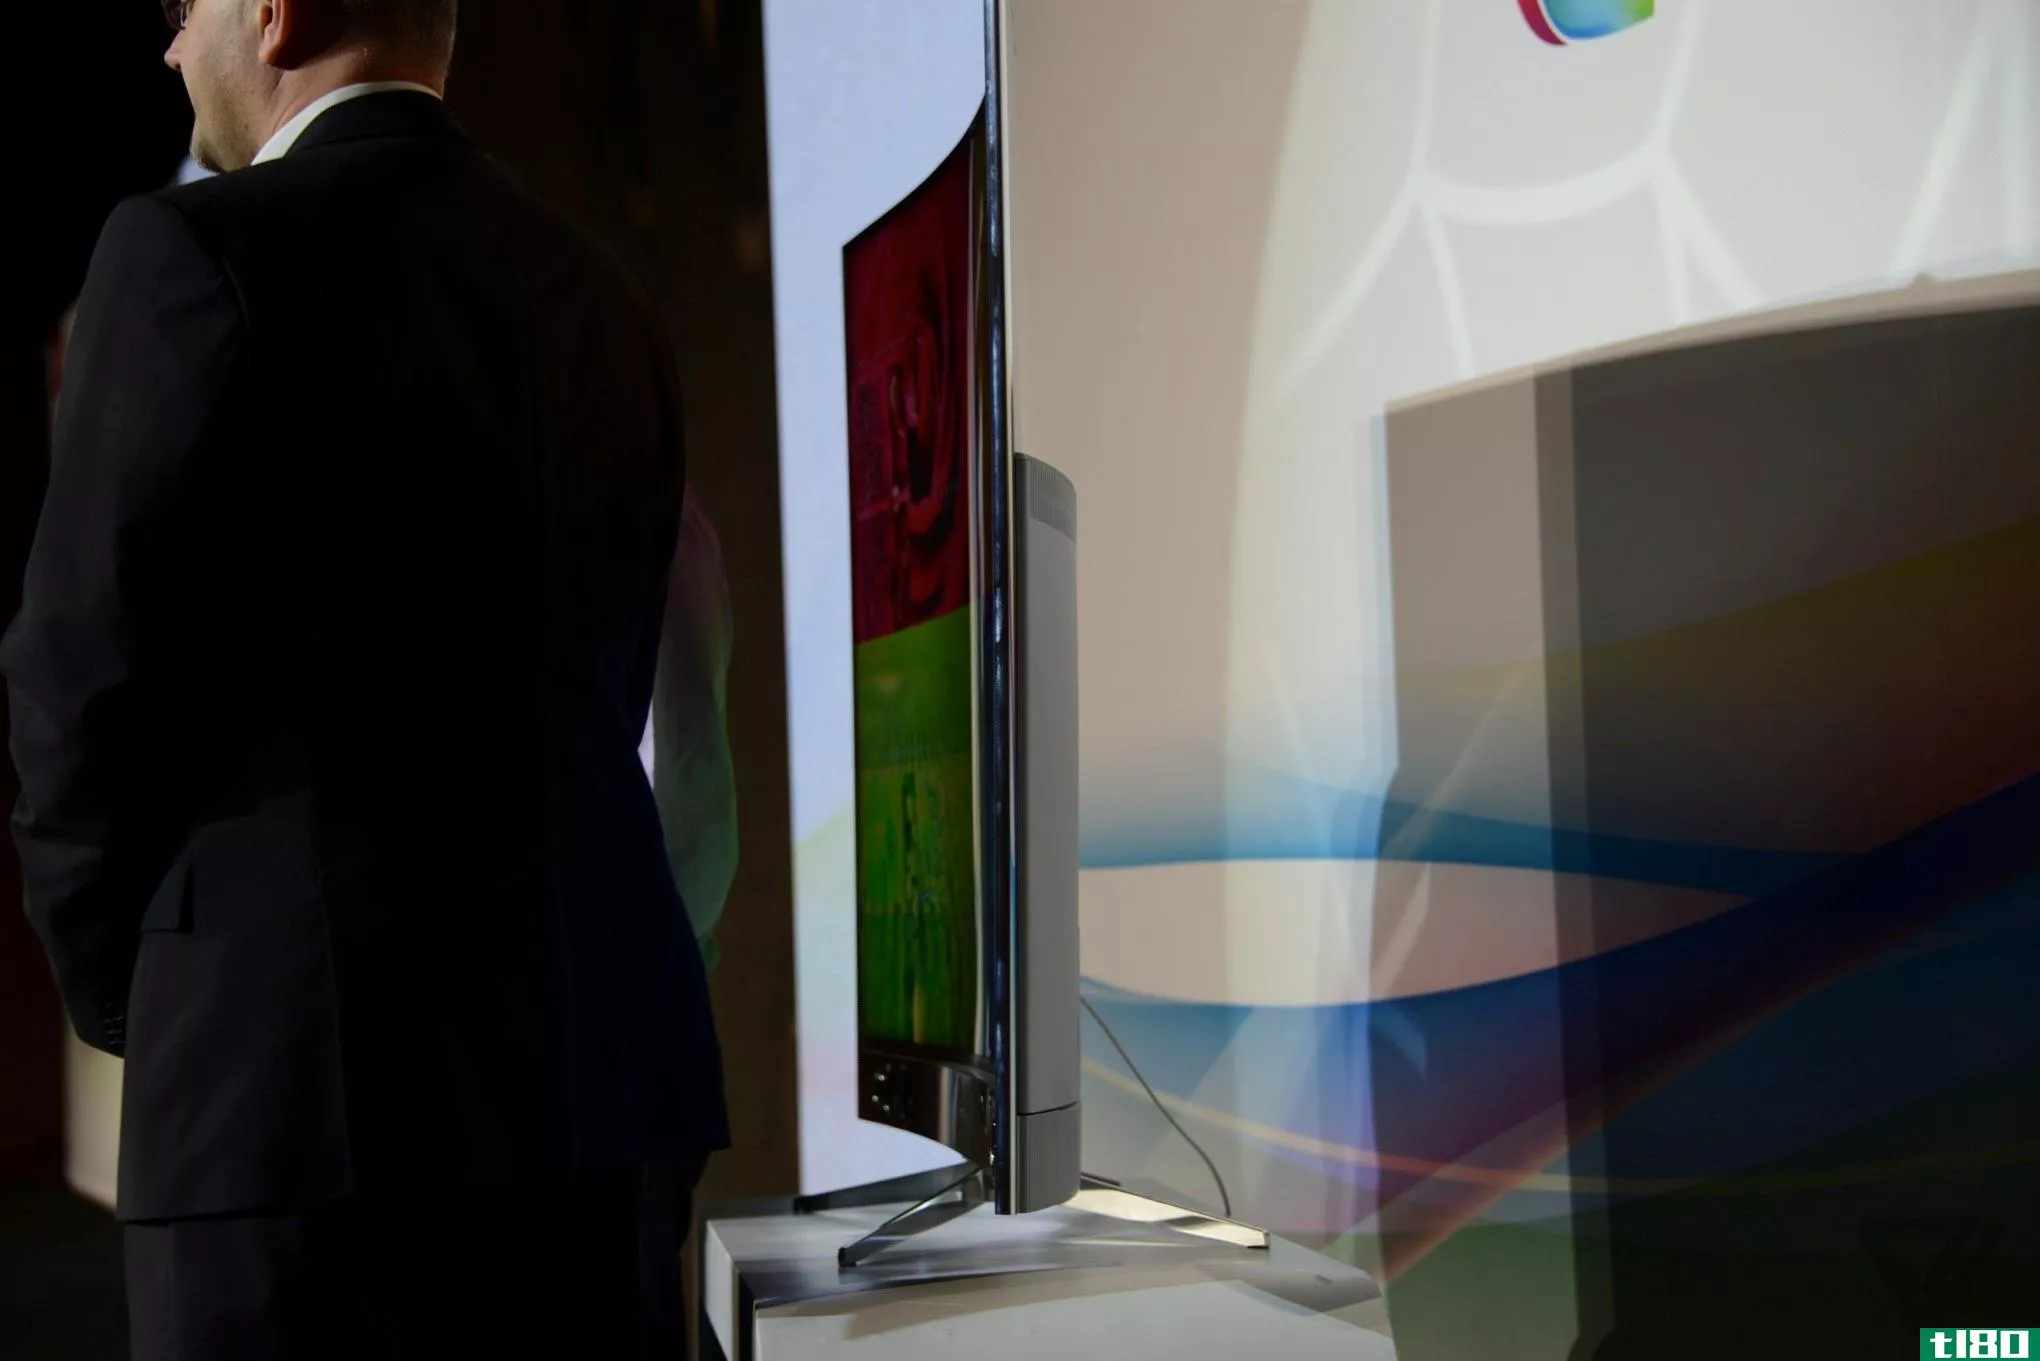 tcl新款x1是展示杜比vision hdr强大功能的最新4k电视